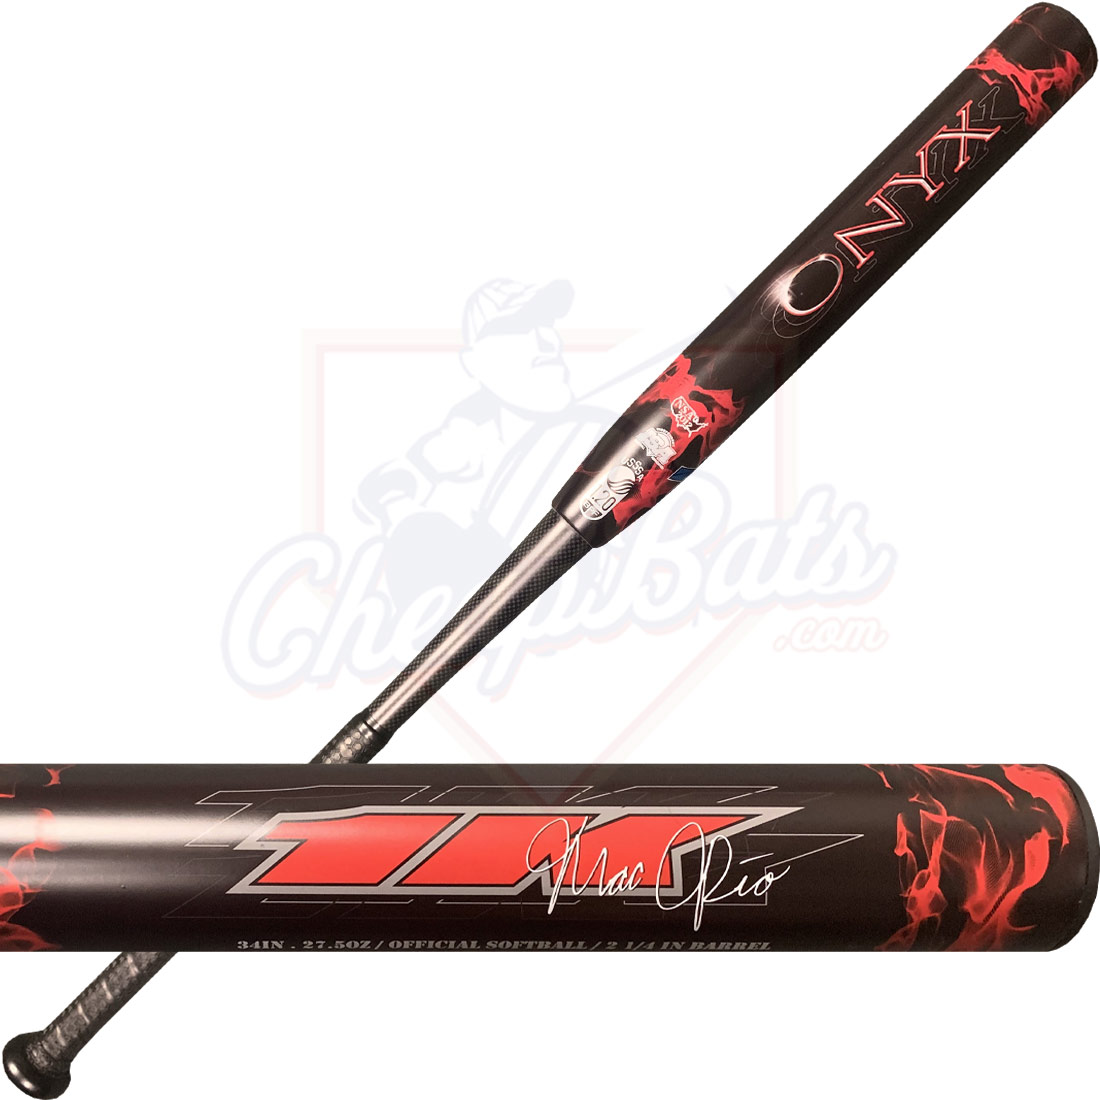 2020 Onyx Mac Rio 1k Slowpitch Softball Bat End Loaded USSSA